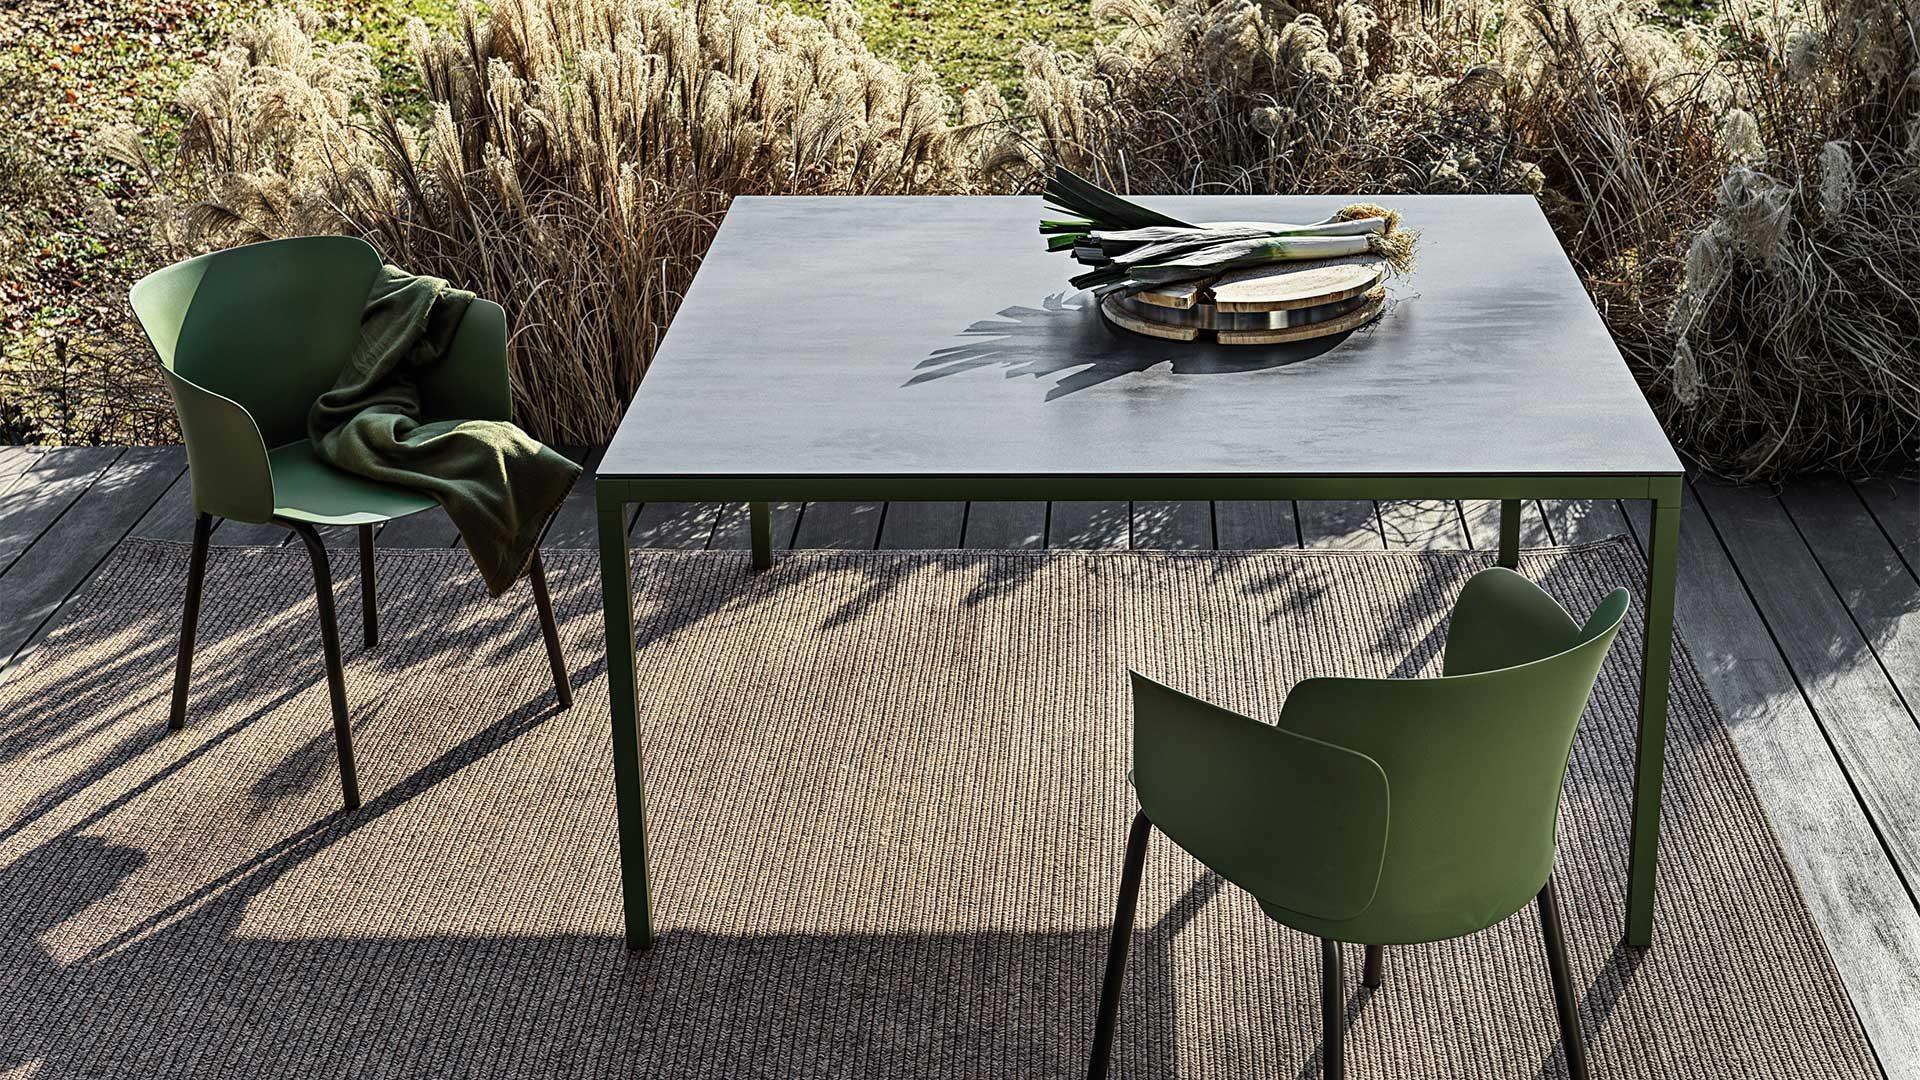 Ceramic Desalto Helsinki 35 Outdoor Table with Bench by Caronni + Bonanomi For Sale